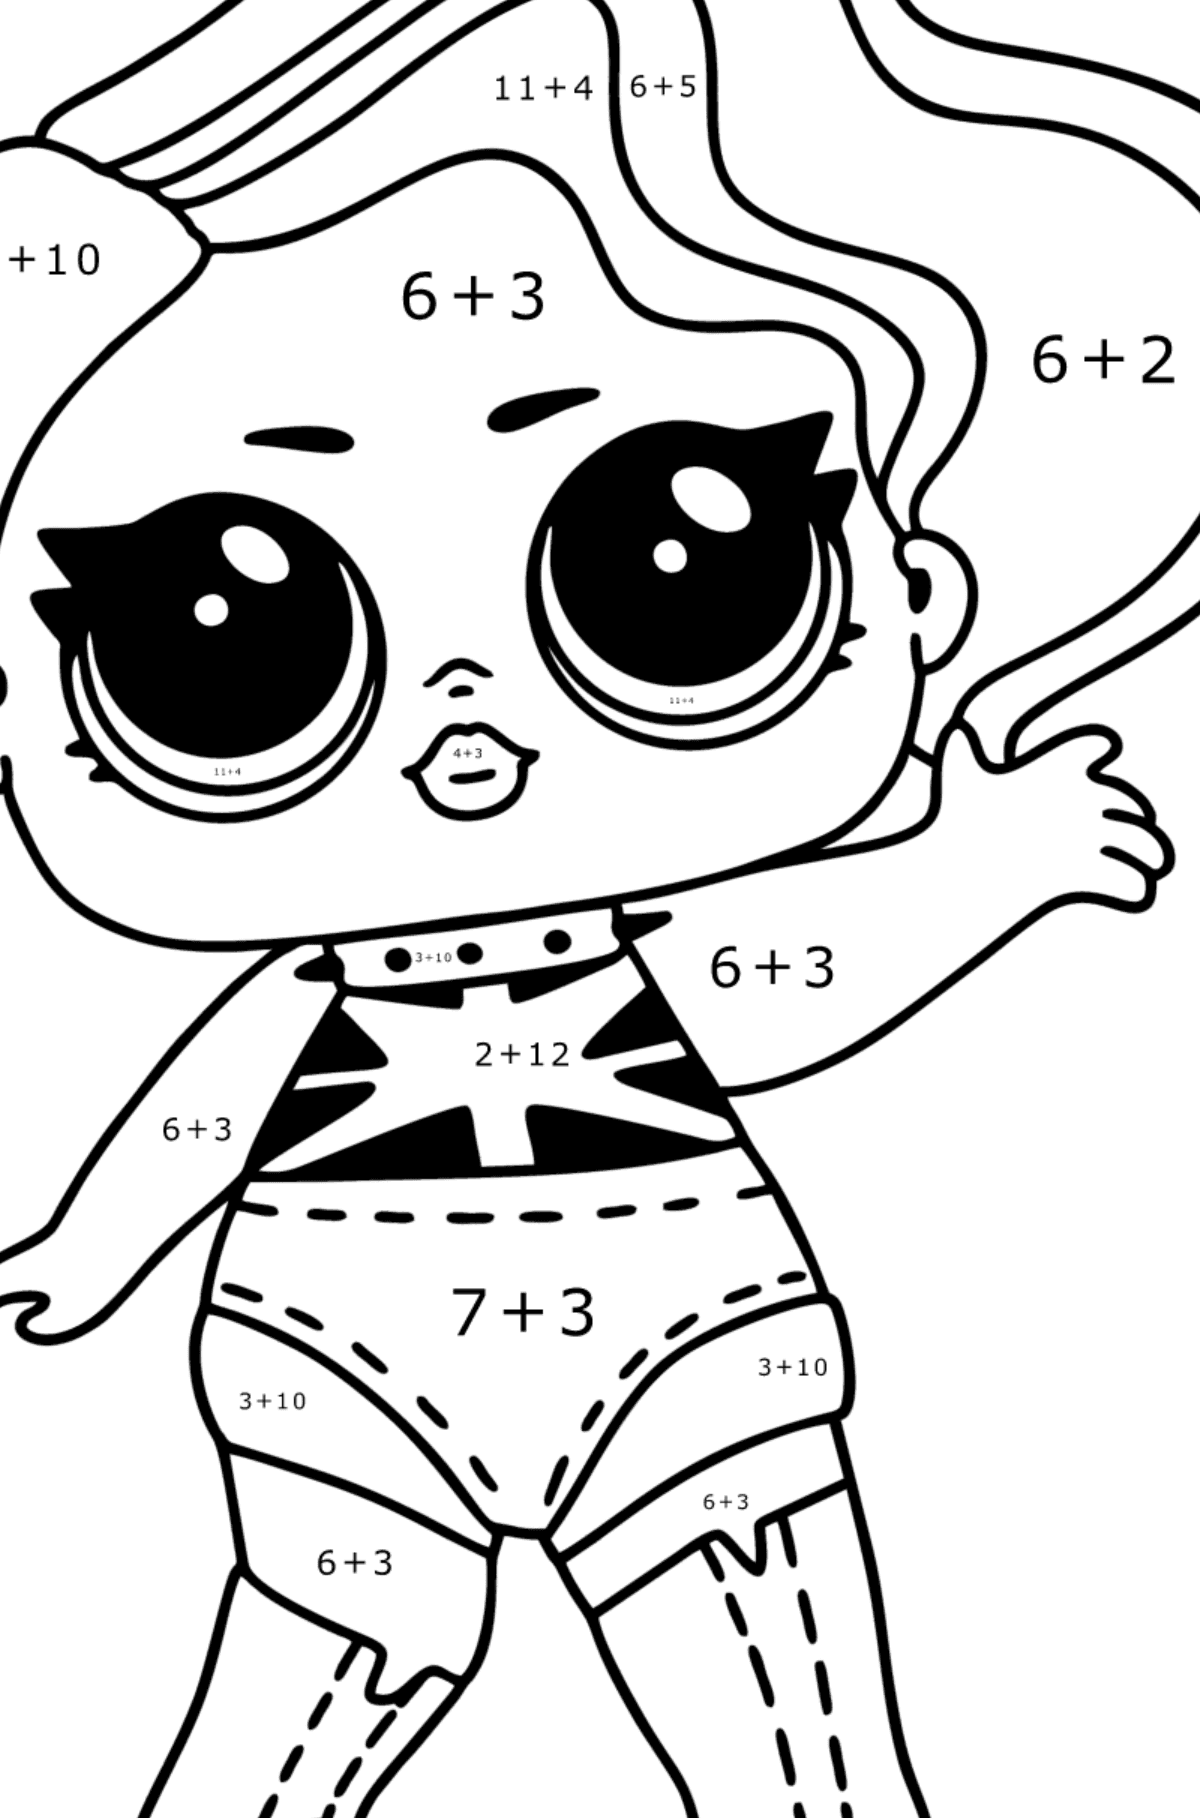 Mewarnai gambar LOL Surprise Cheeky babe - Pewarnaan Matematika: Pertambahan untuk anak-anak